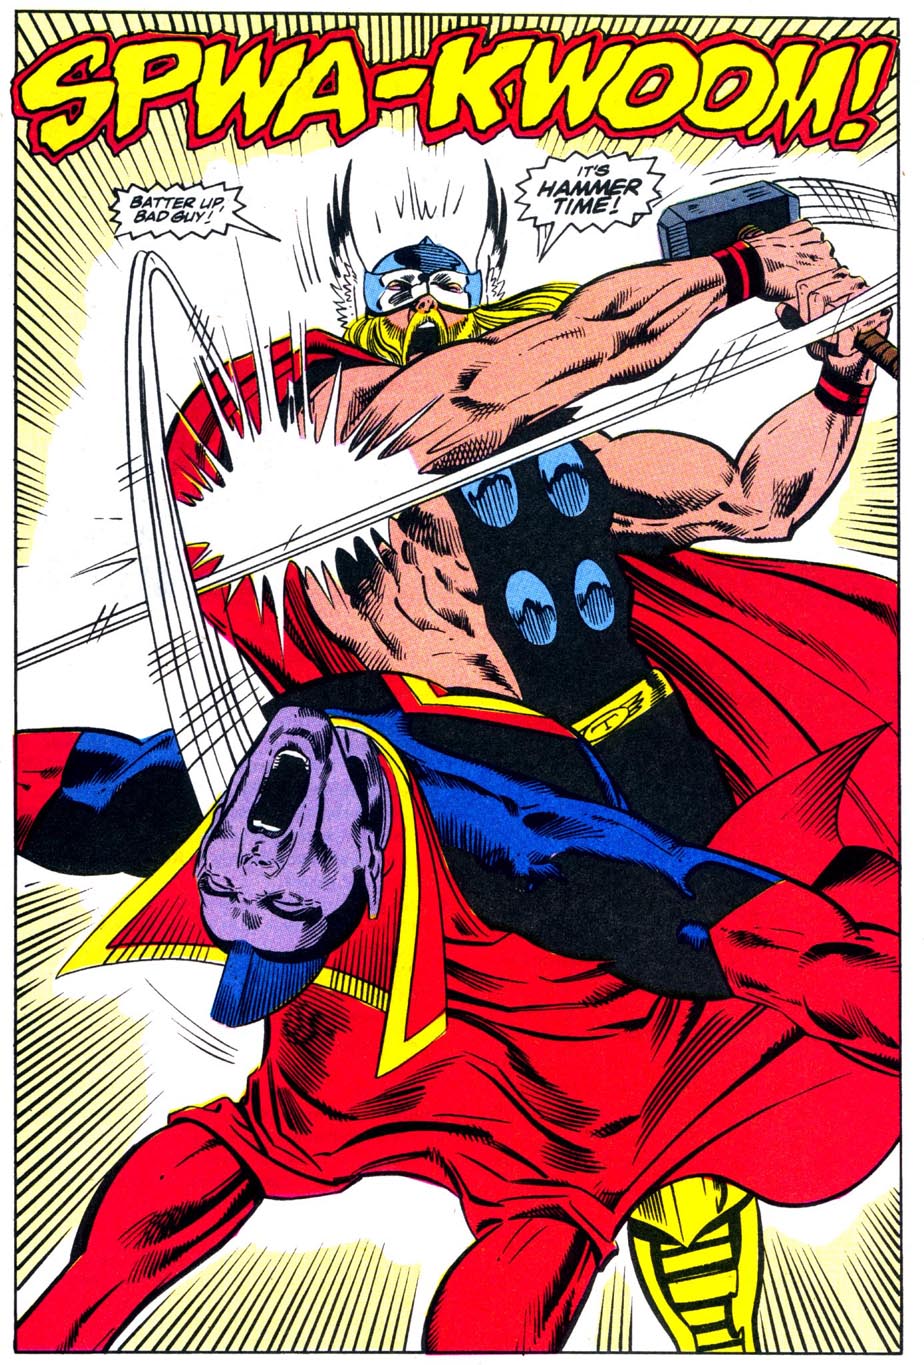 Thor vs. Gladiator